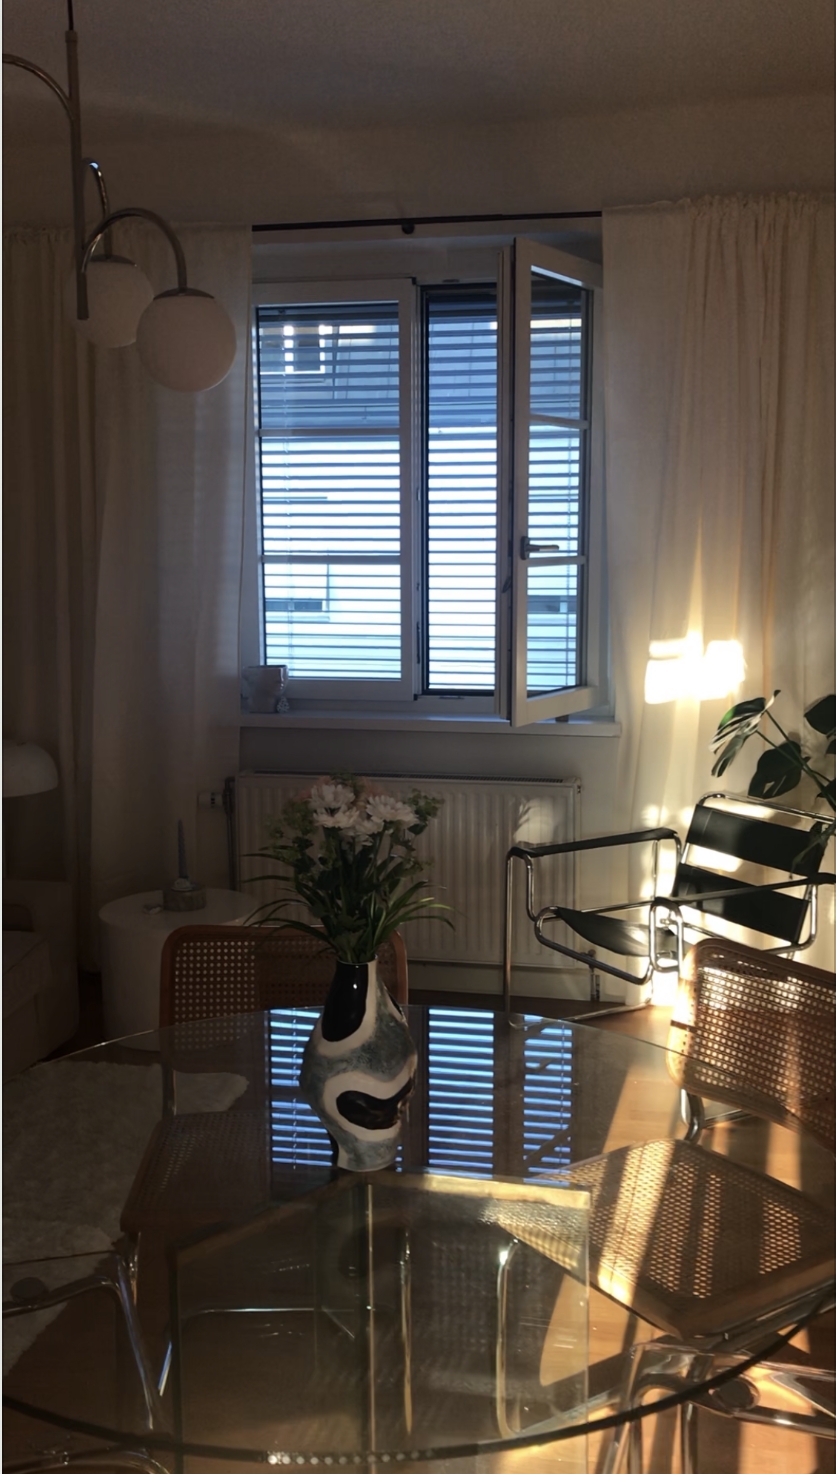 Bin so verlieb in das Licht am Morgen✨ 
#light #livingroom #inspiration #elegant 